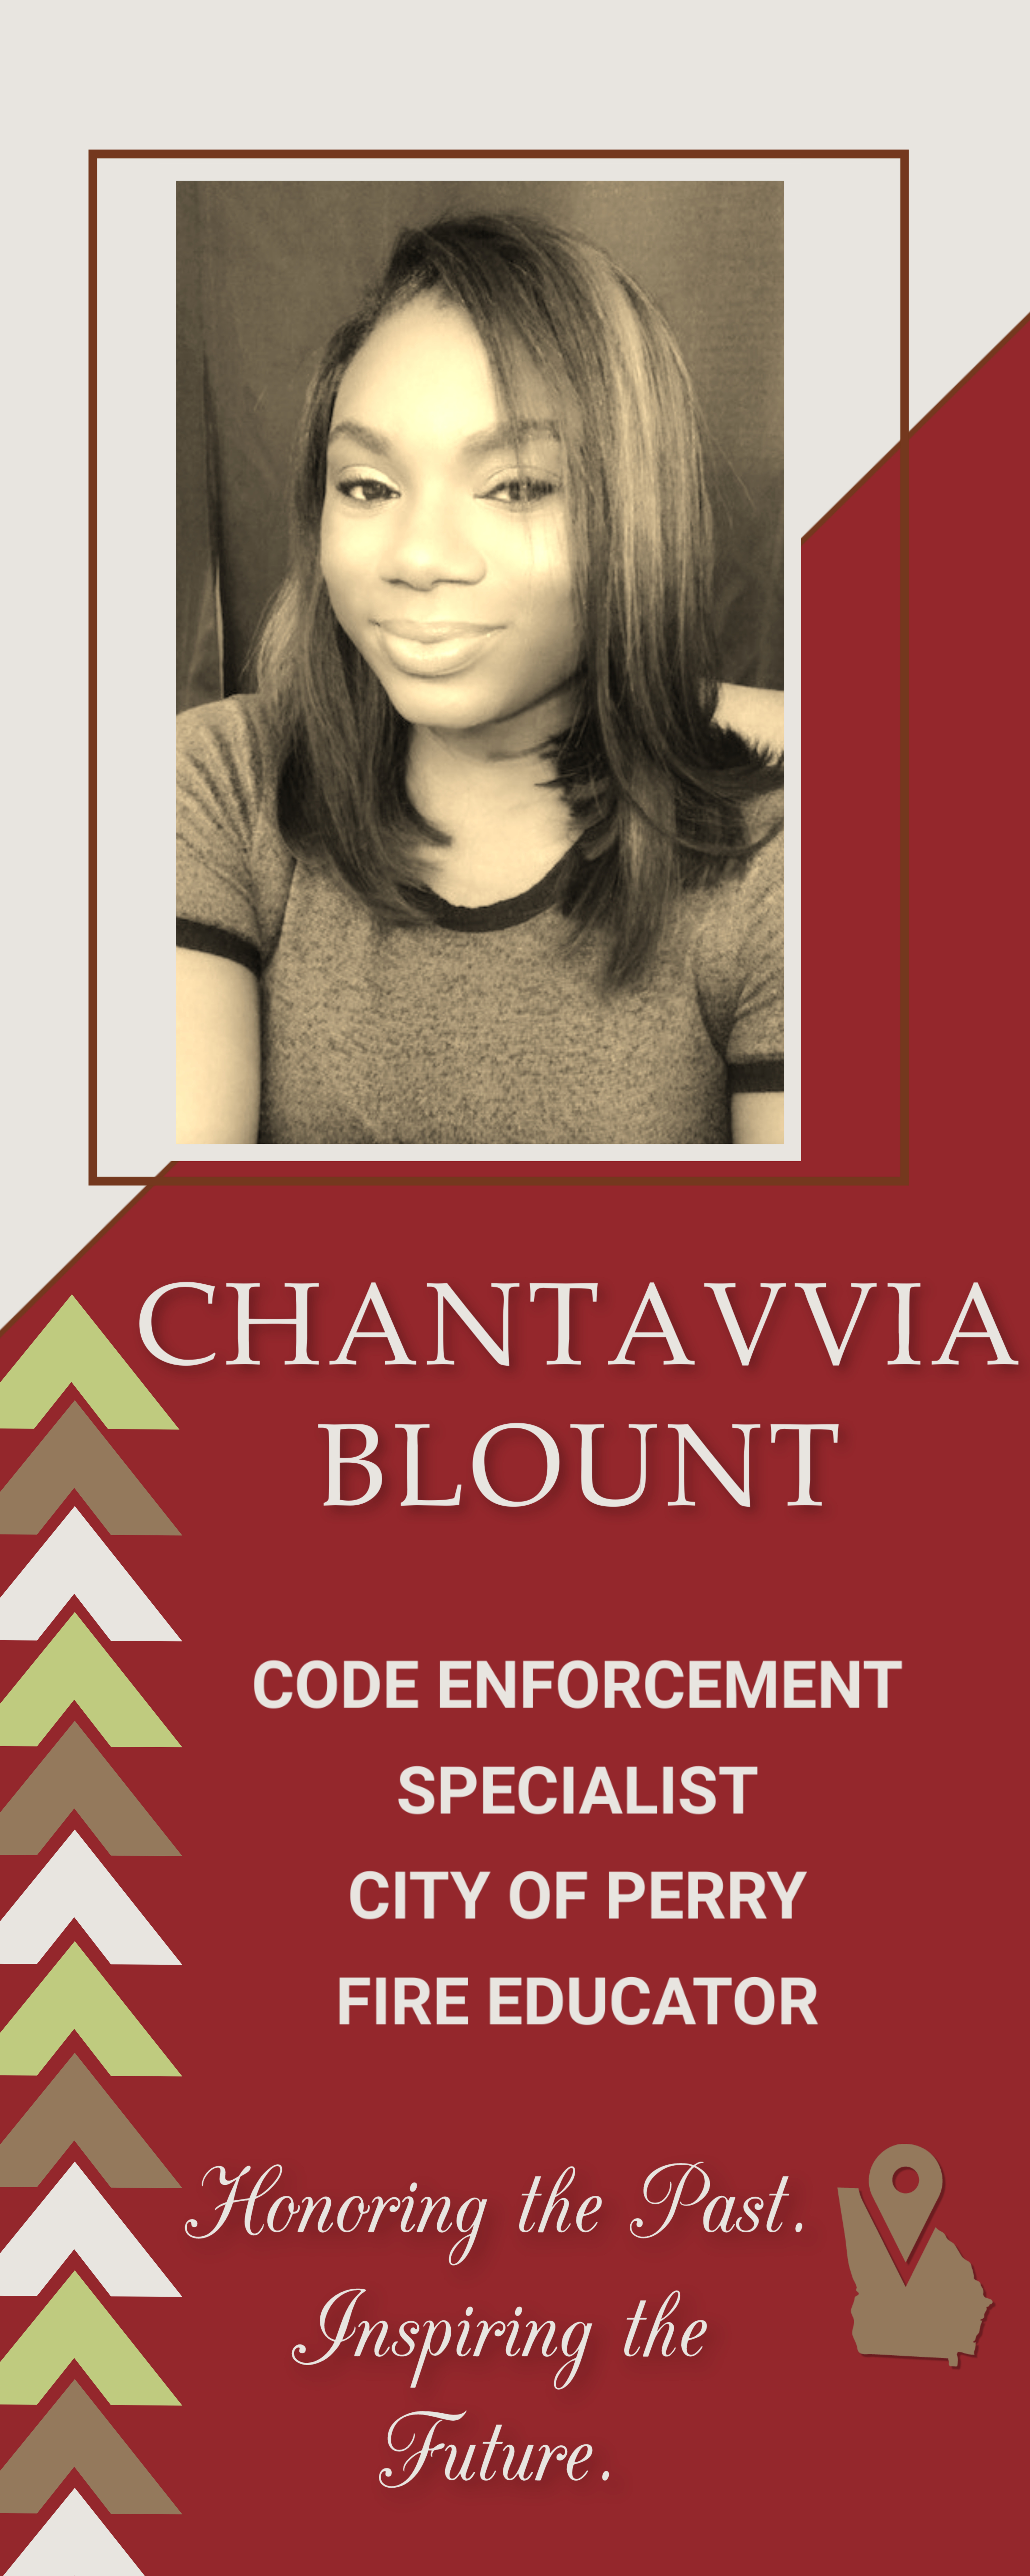 Chantavvia Blount